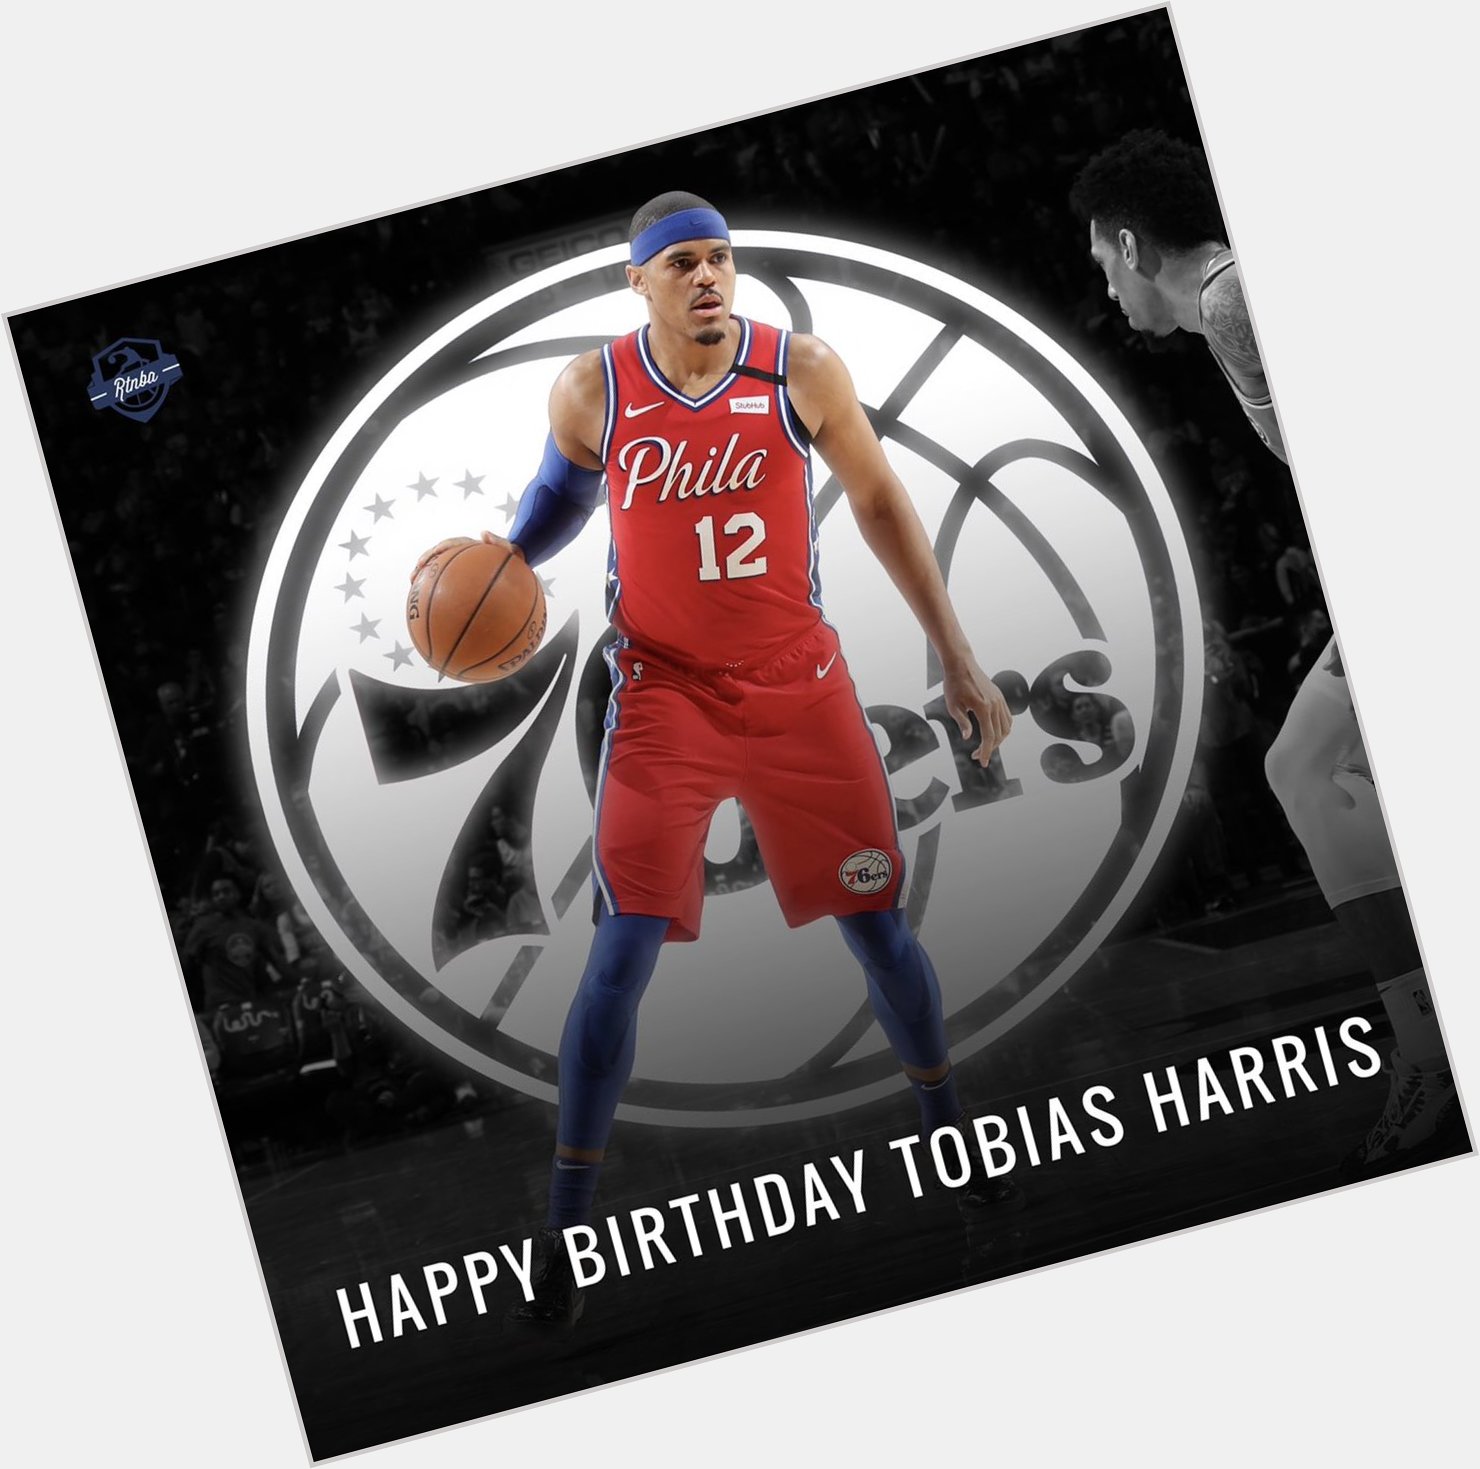 Happy birthday Tobias Harris  